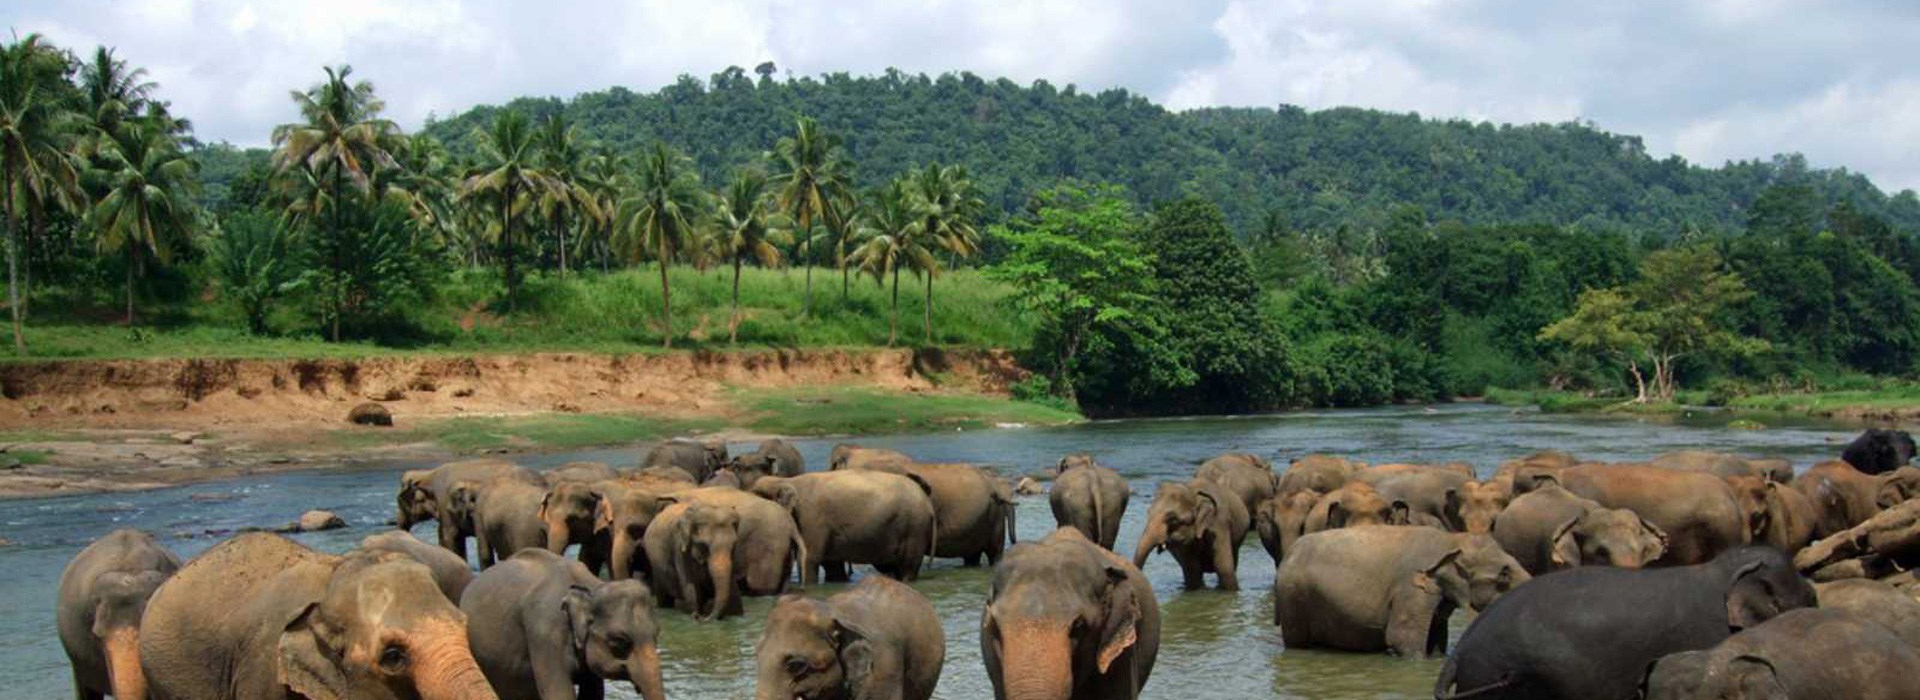 Visiter Pinnawala - Sri Lanka